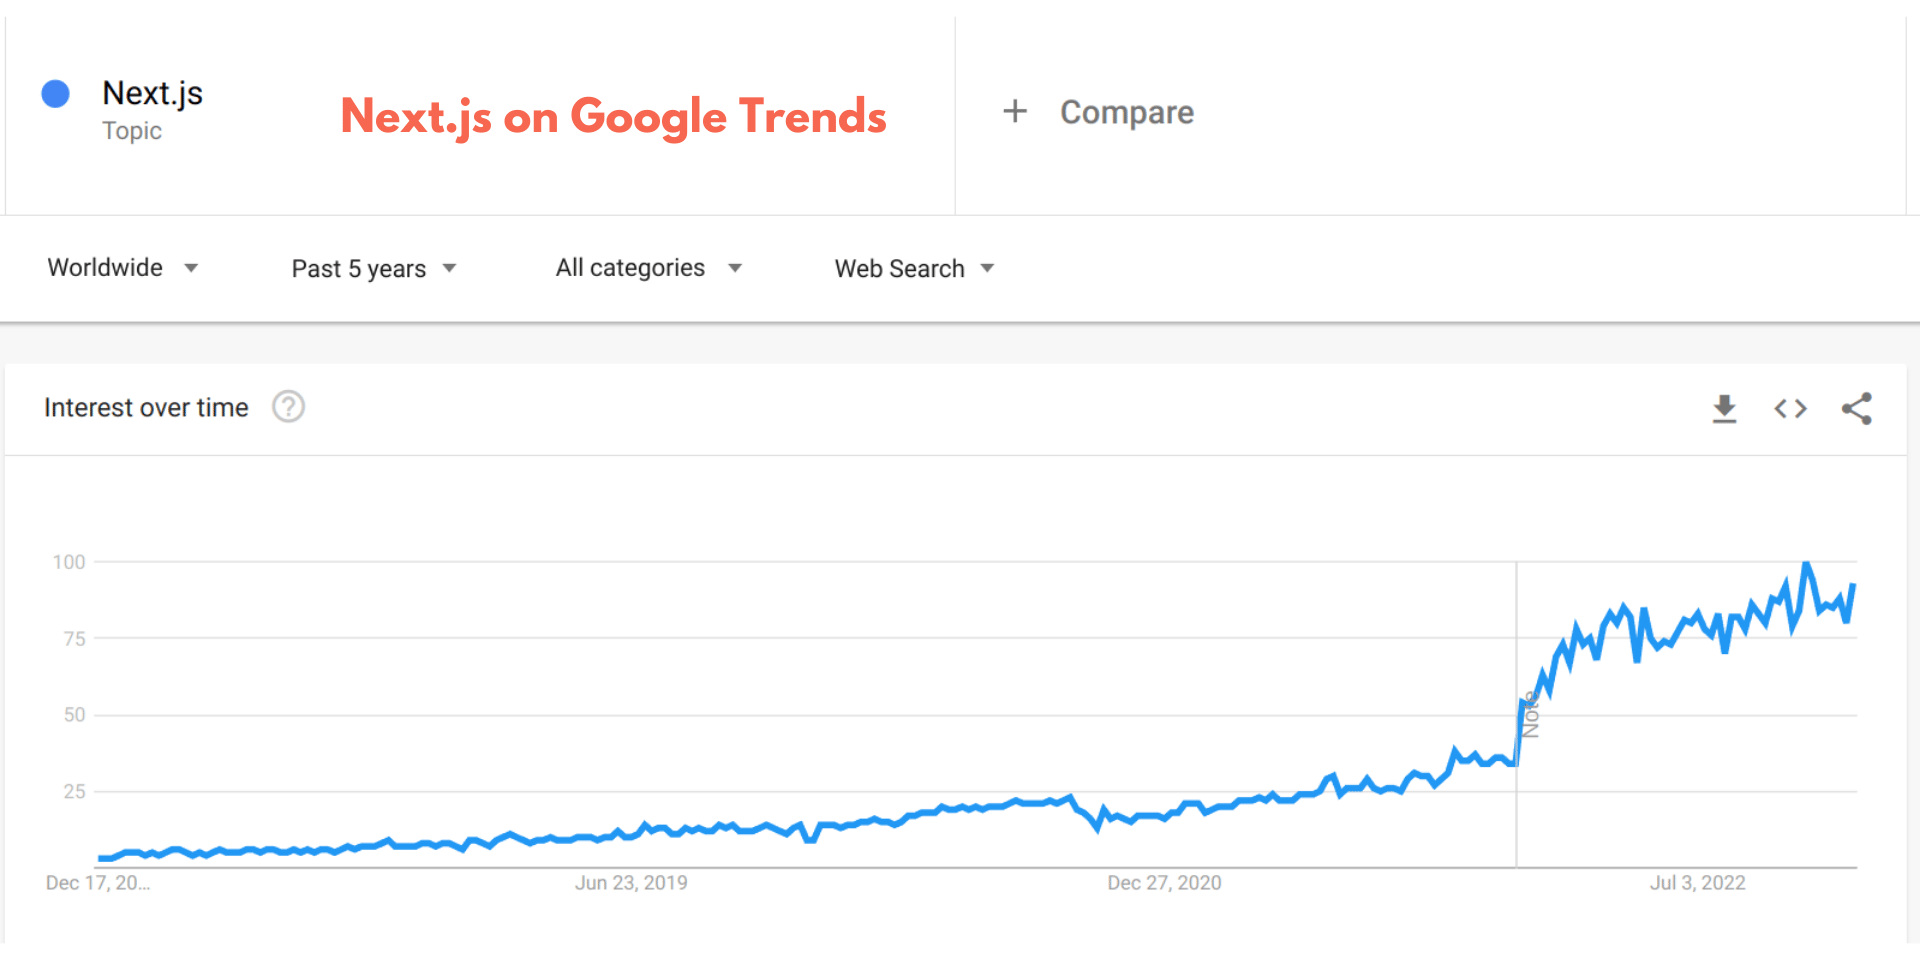 Next.js on Google Trends